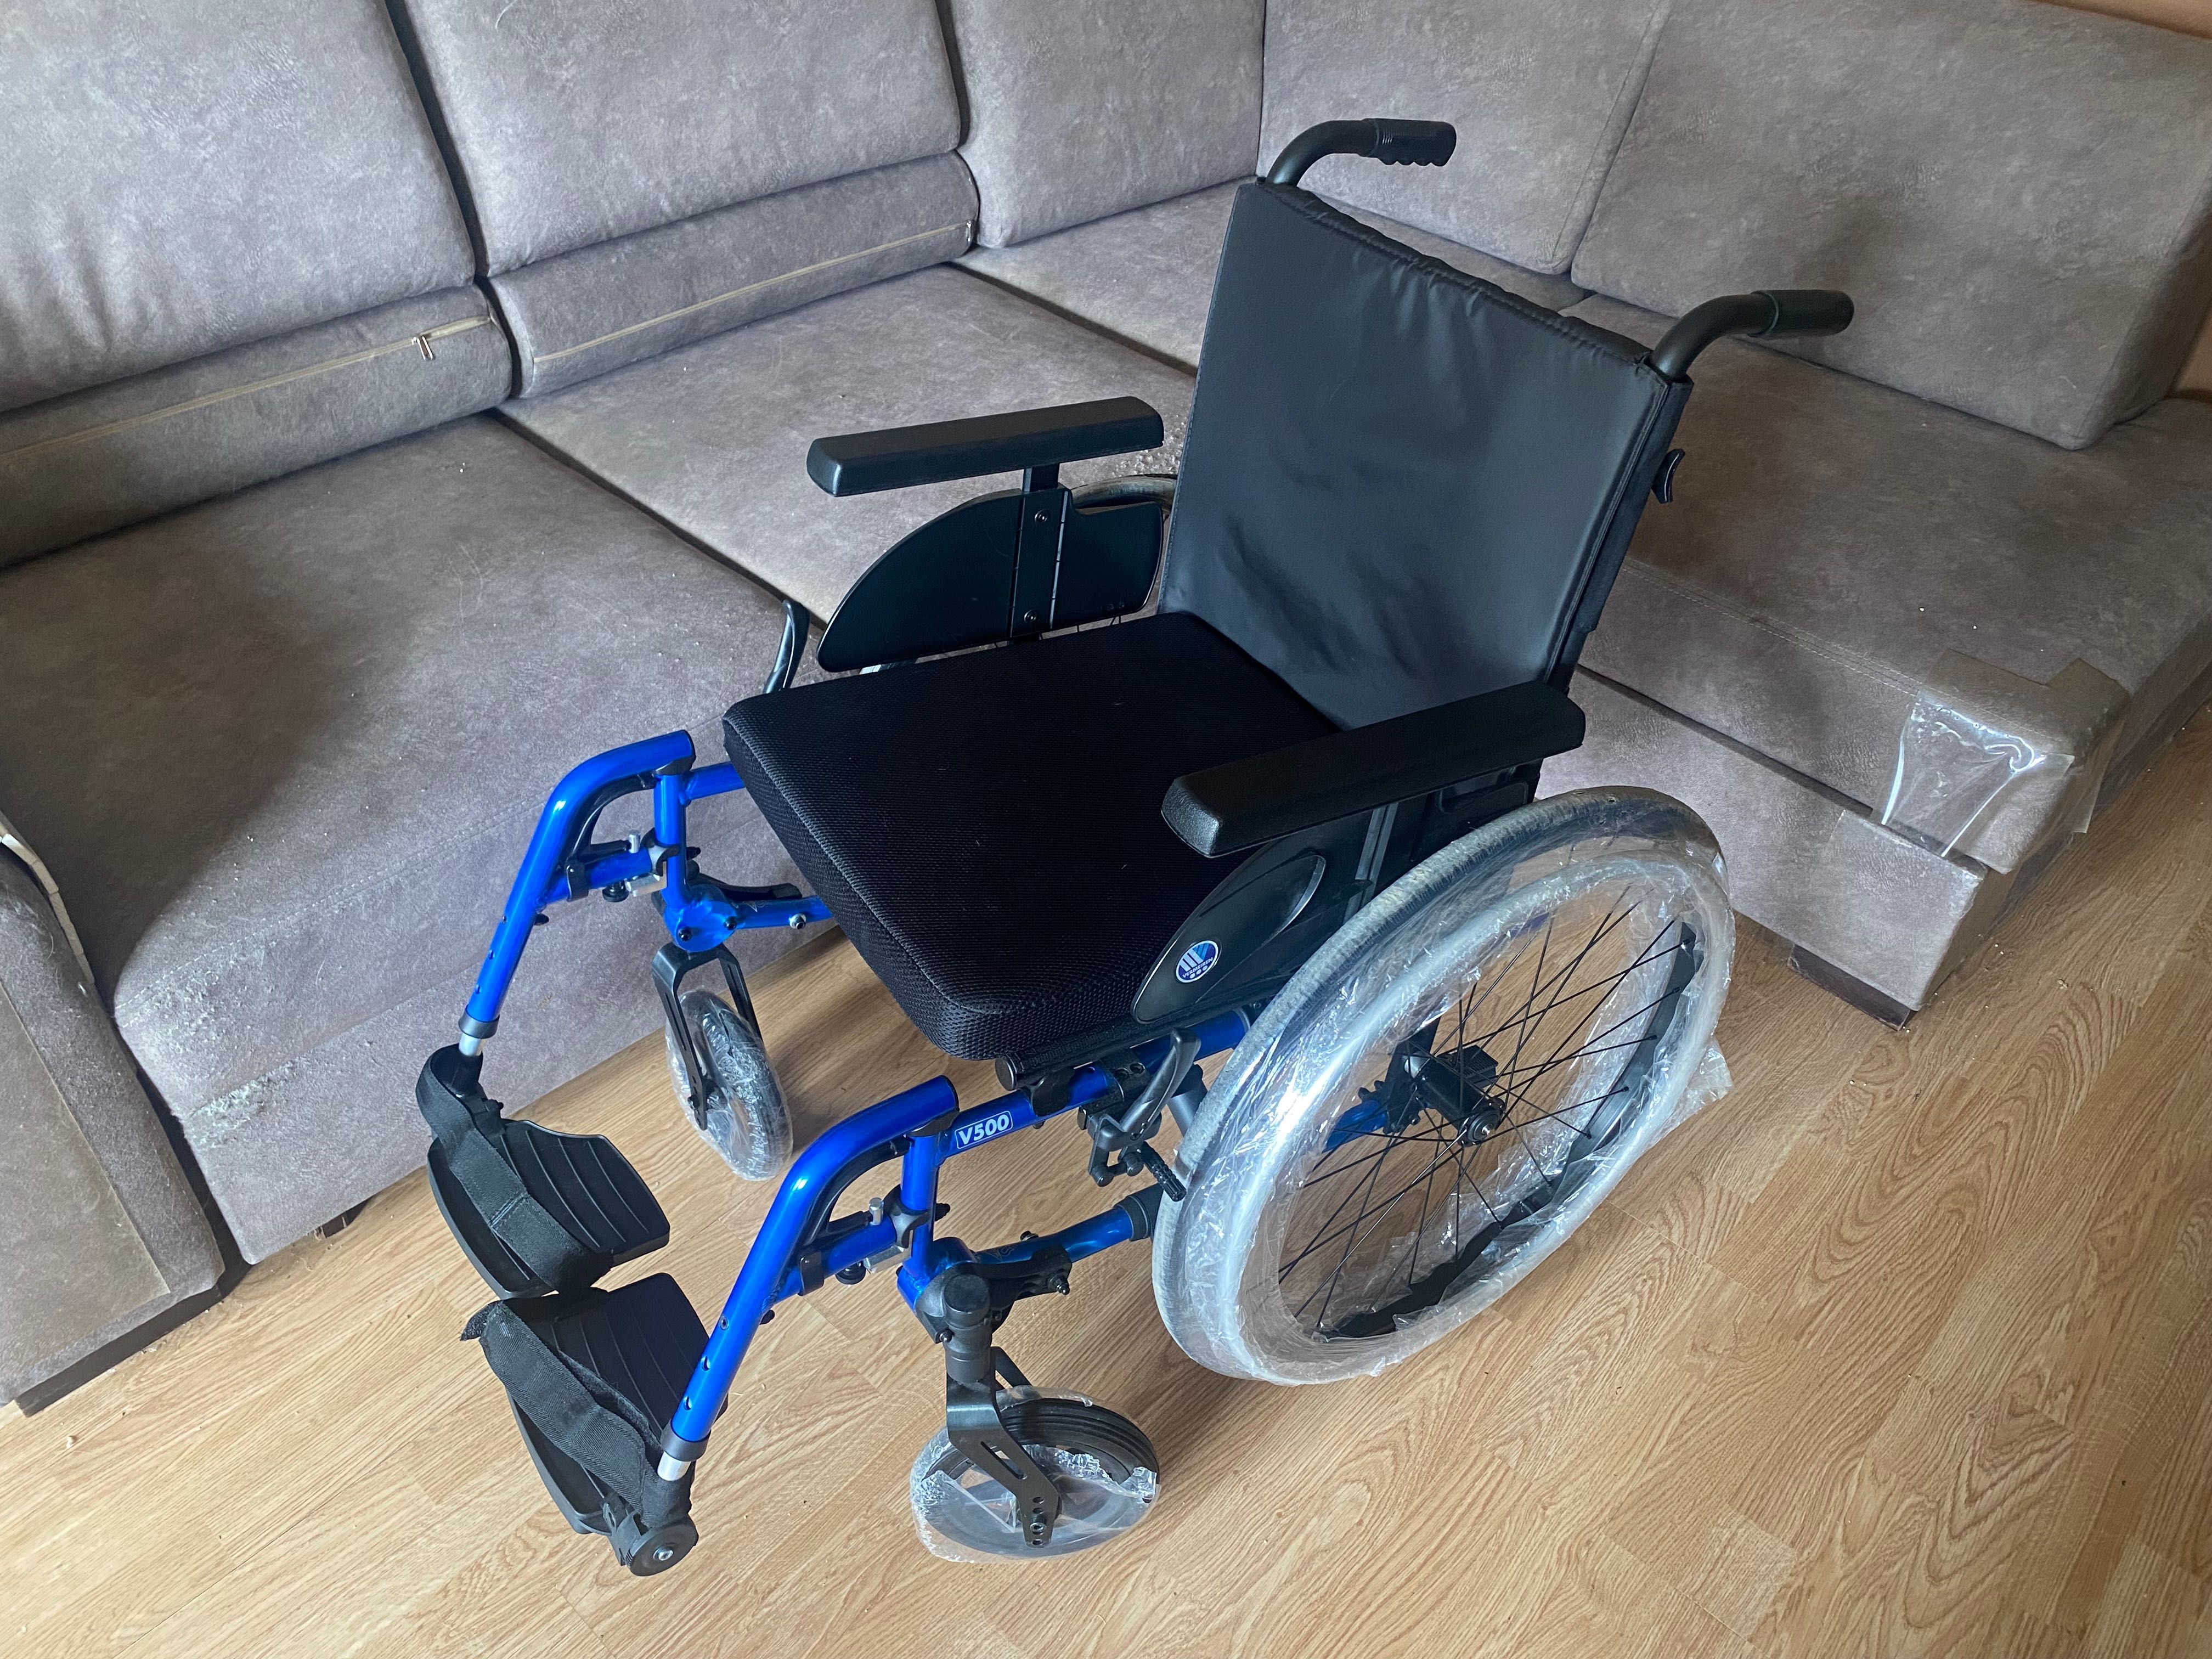 NOWY wózek inwalidzki V500 Light Vermeiren